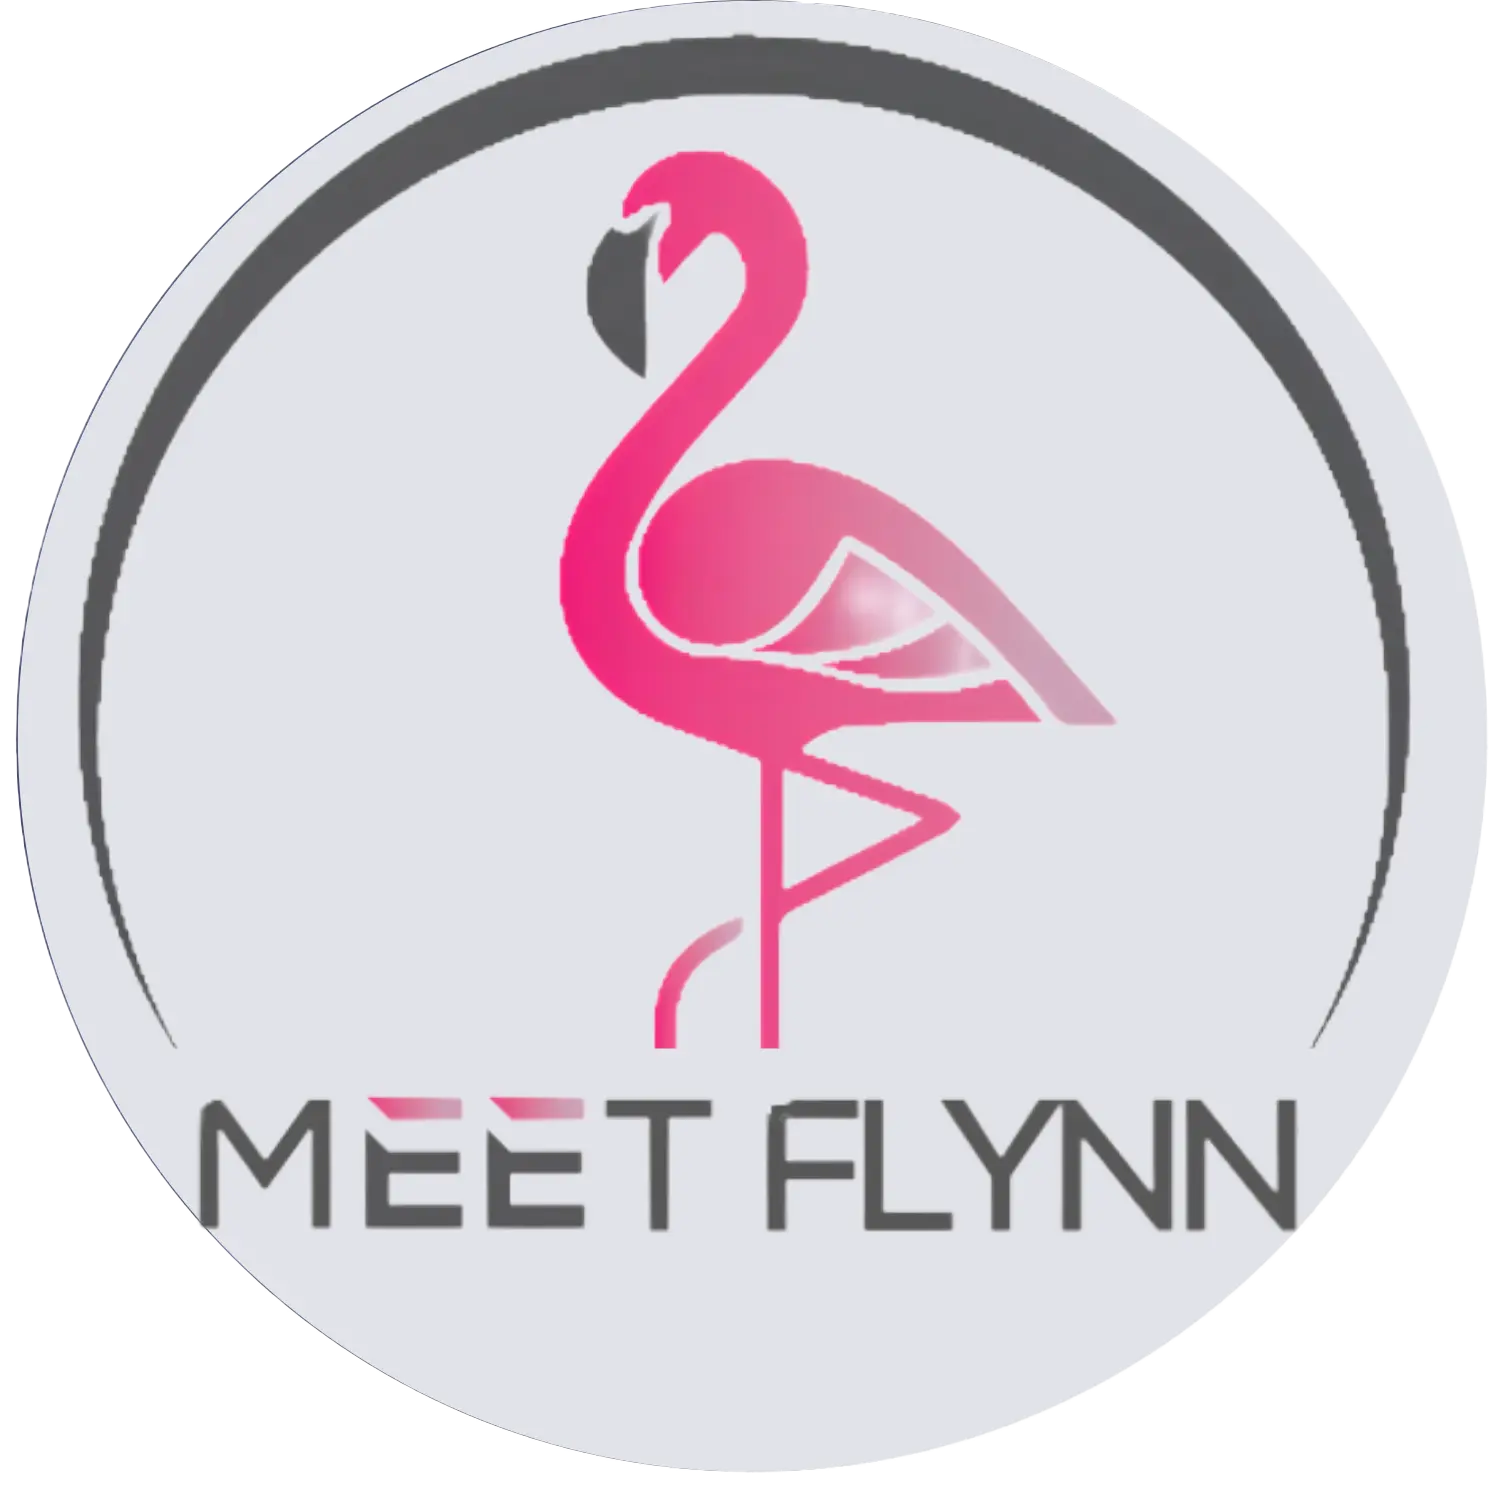 Meet Flynn the flamingo